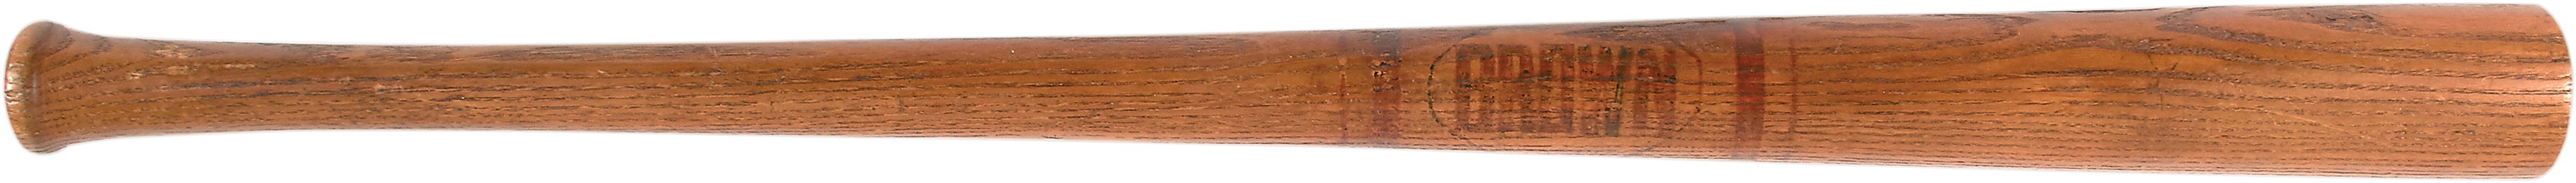 1890s Stenciled Baseball Bat by "Brown"